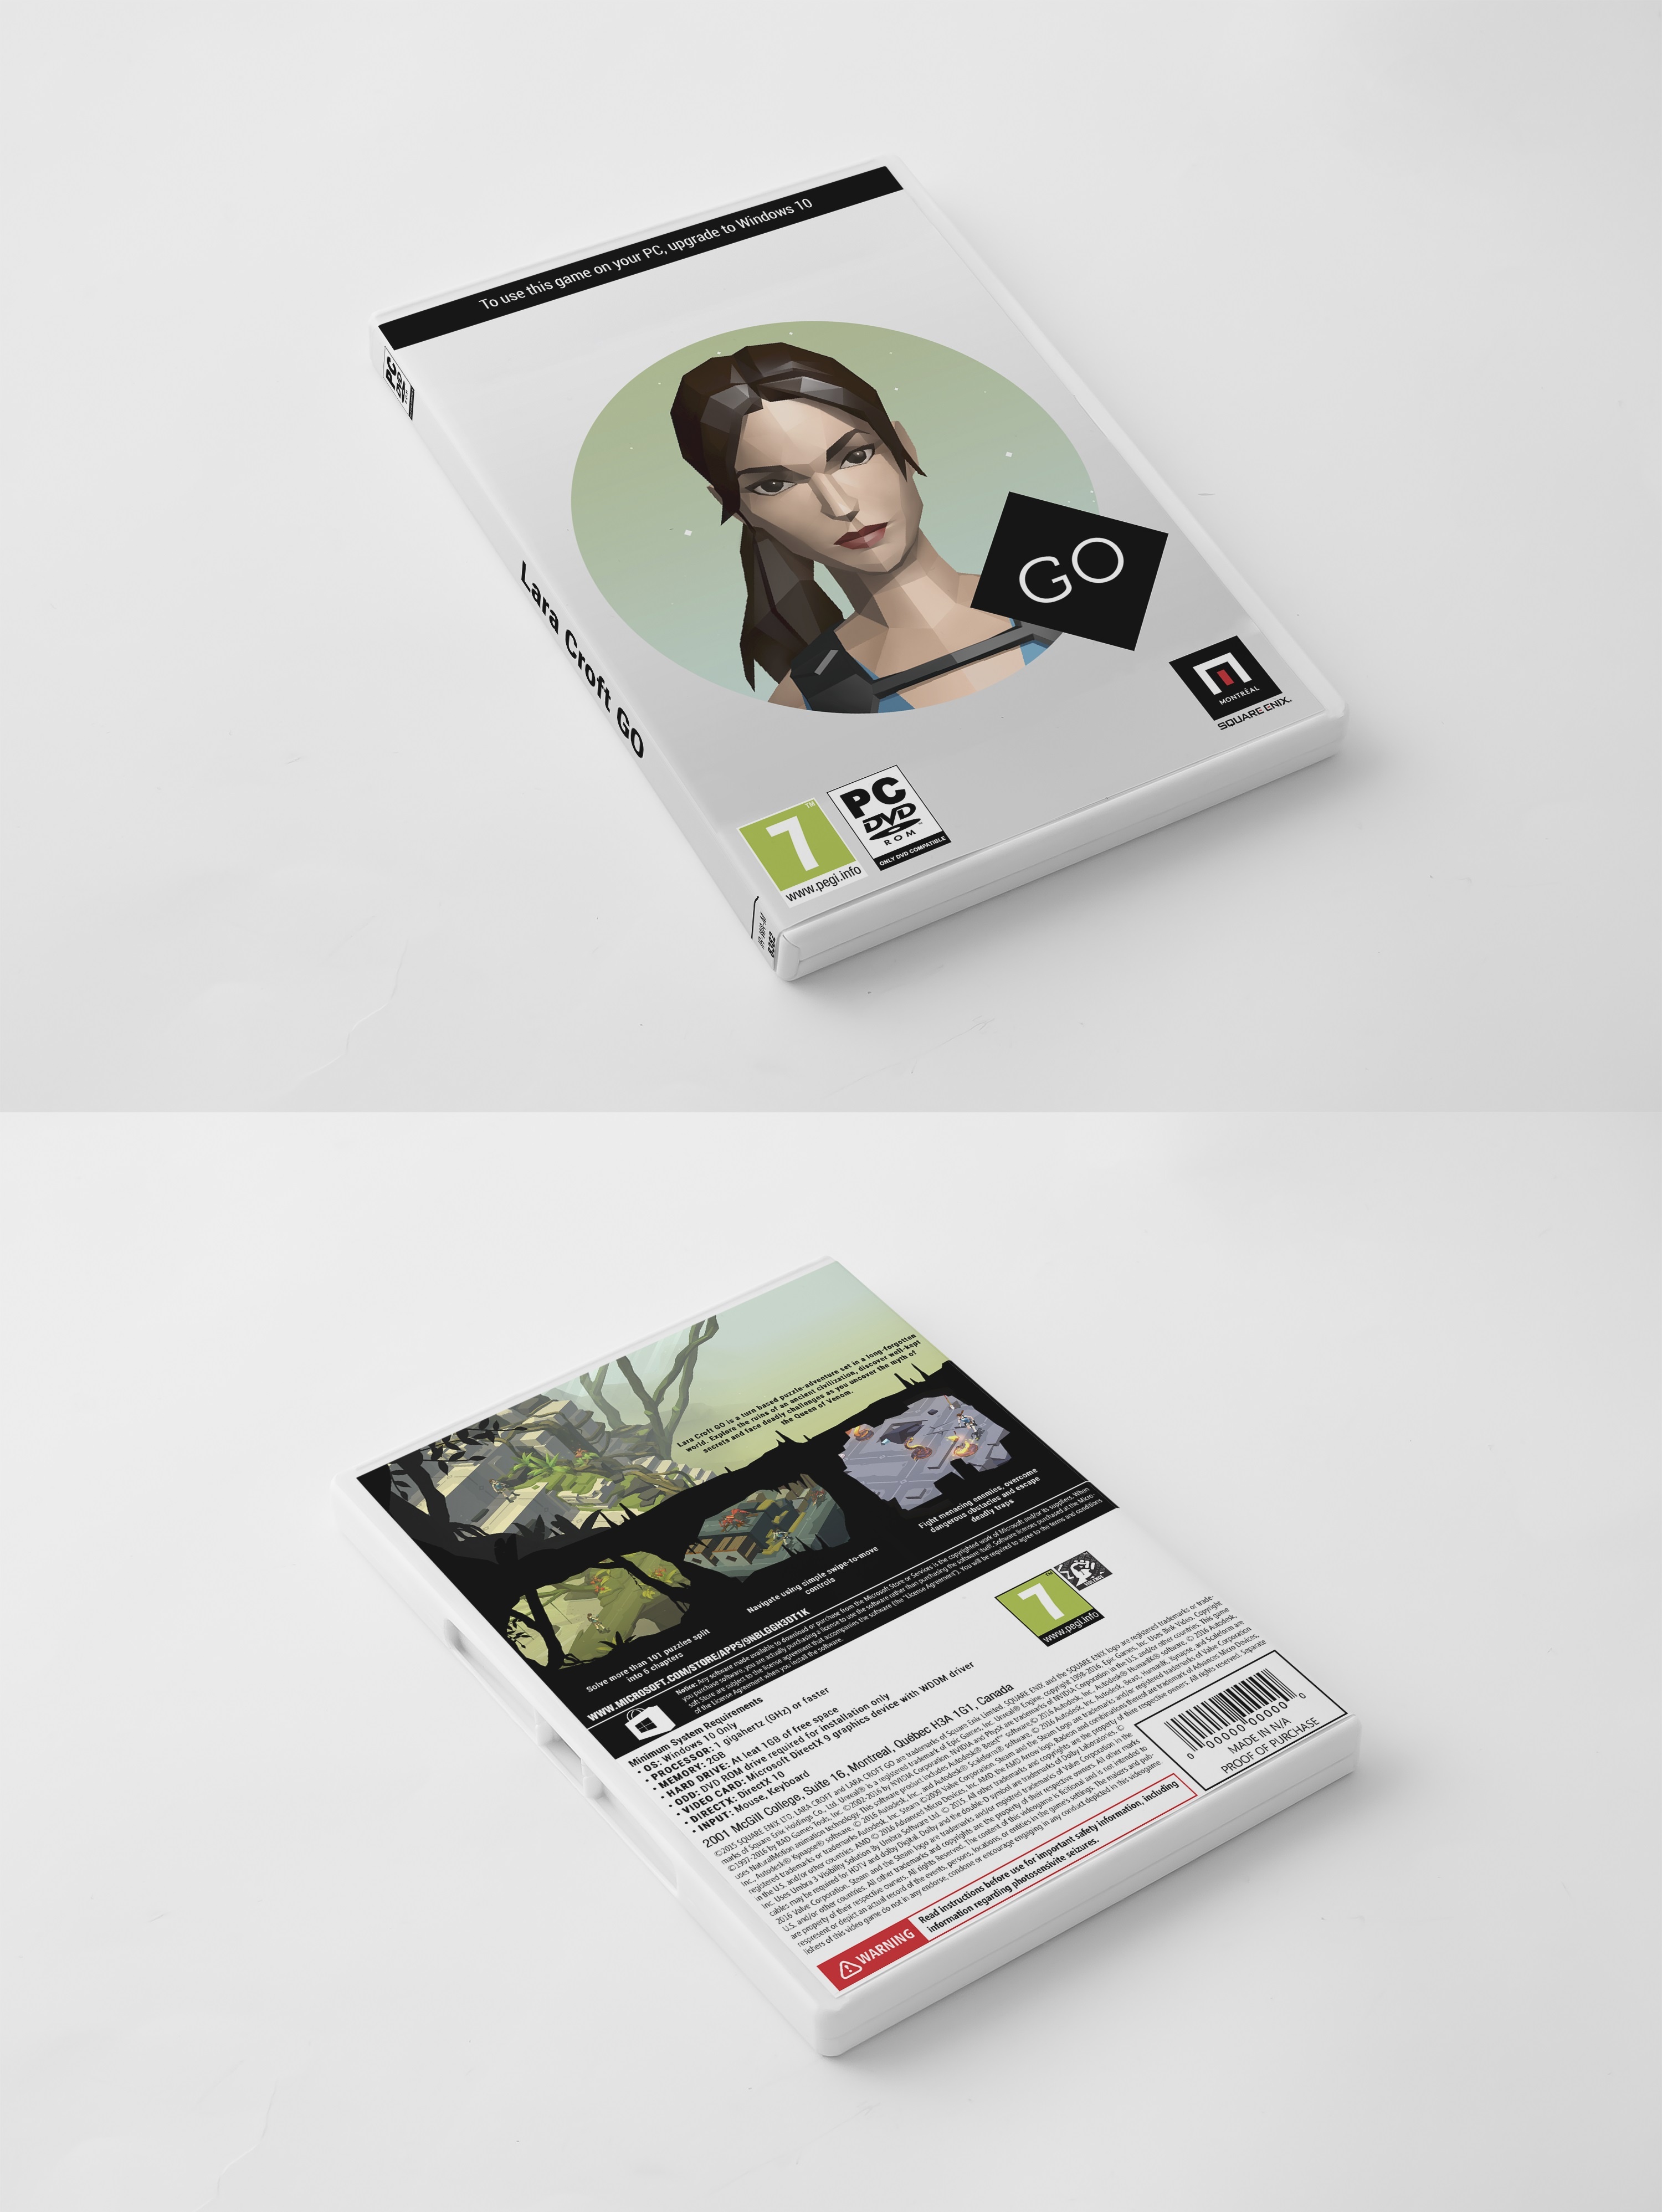 Lara Croft GO box cover